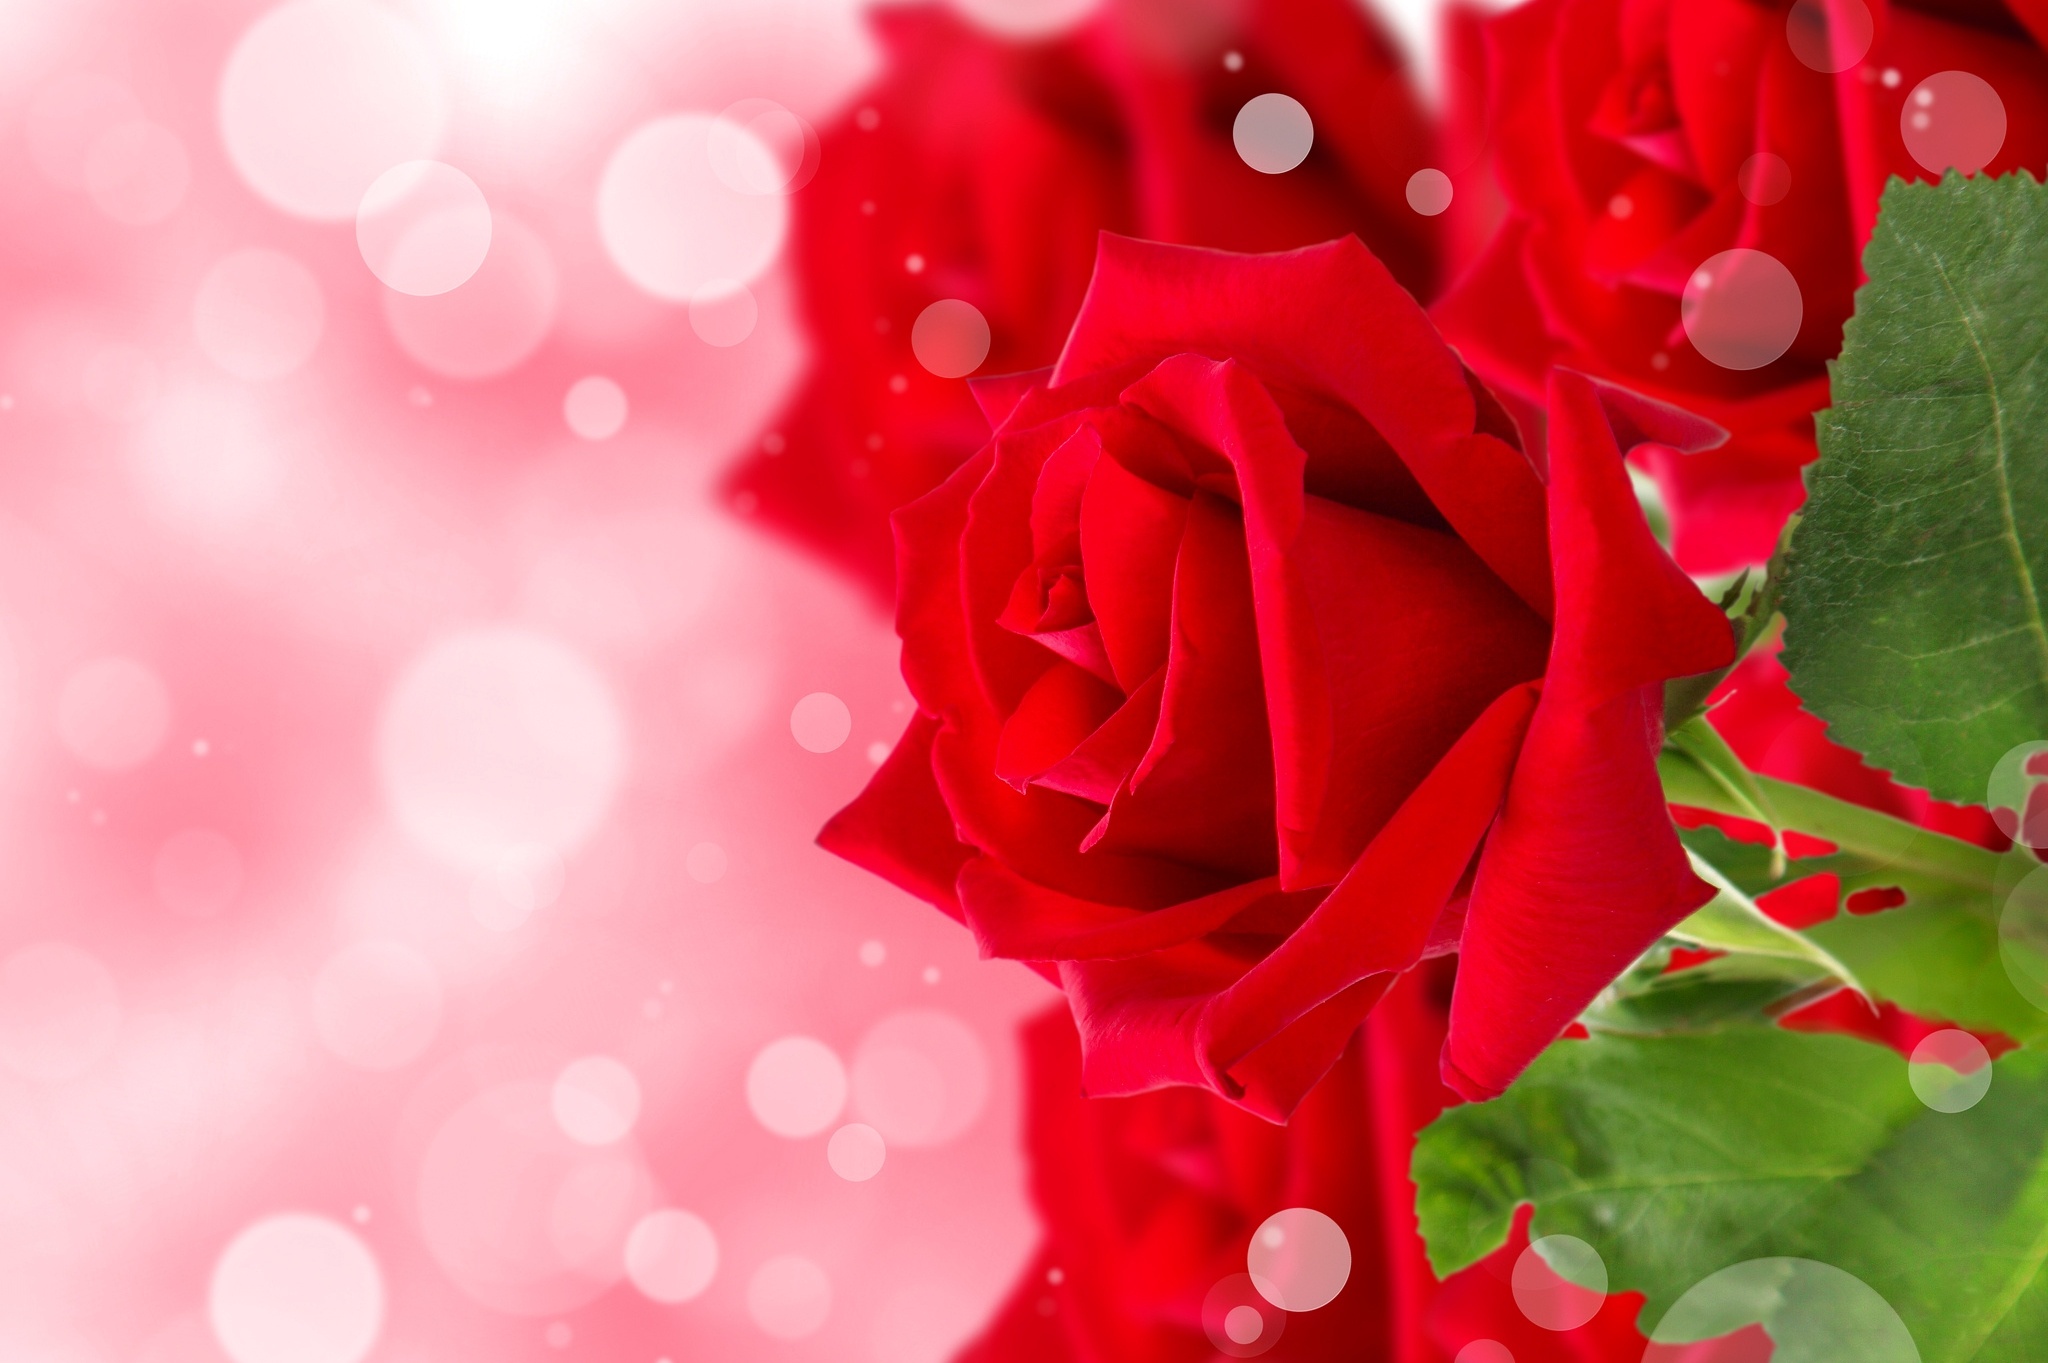 earth, rose, bud, petal, red rose, flowers FHD, 4K, UHD